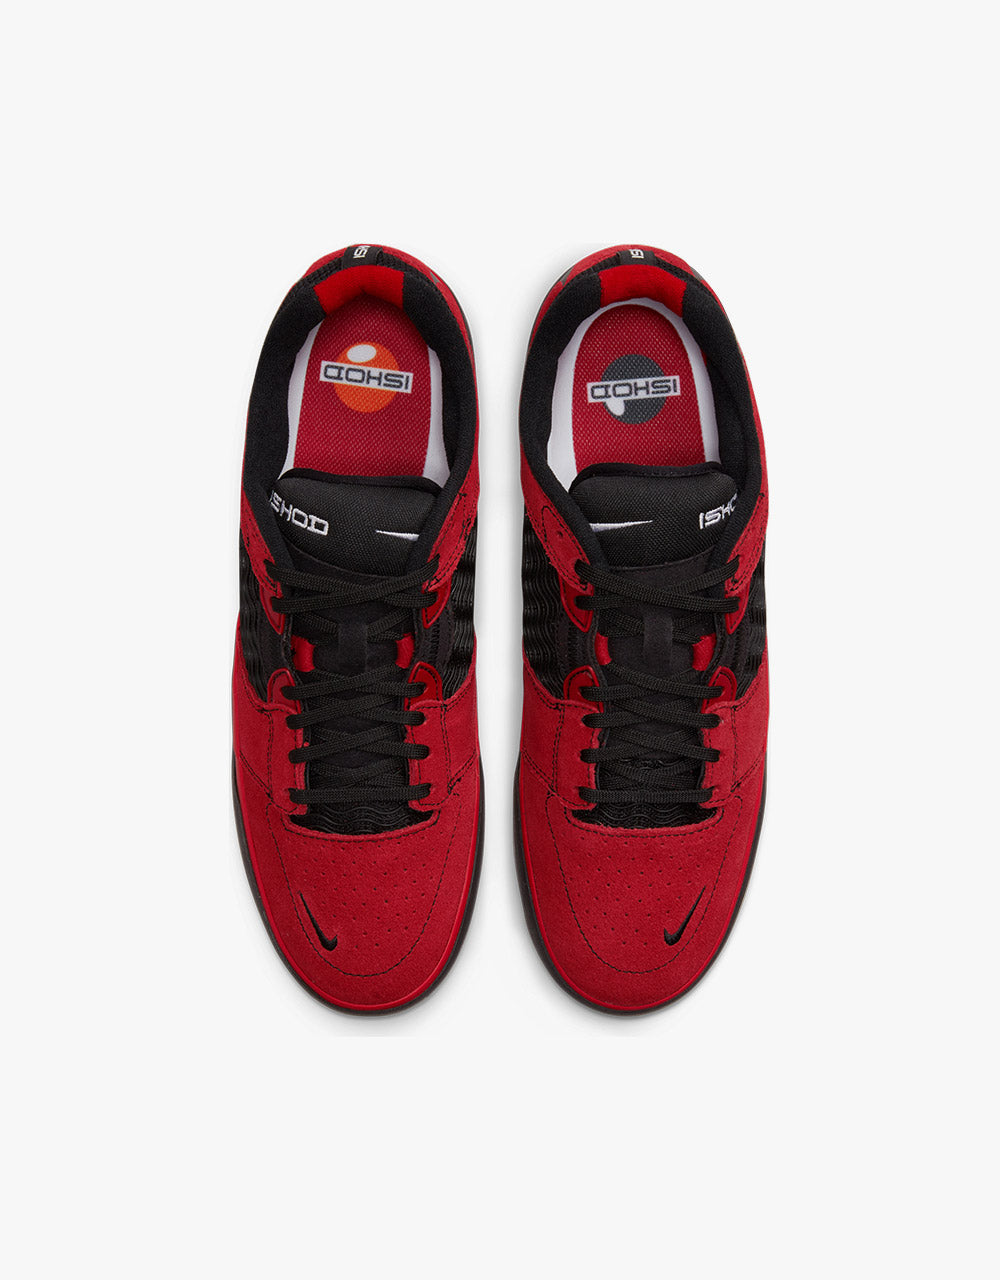 Nike SB Ishod Skate Shoes - Varsity Red/Black-Varsity Red-White